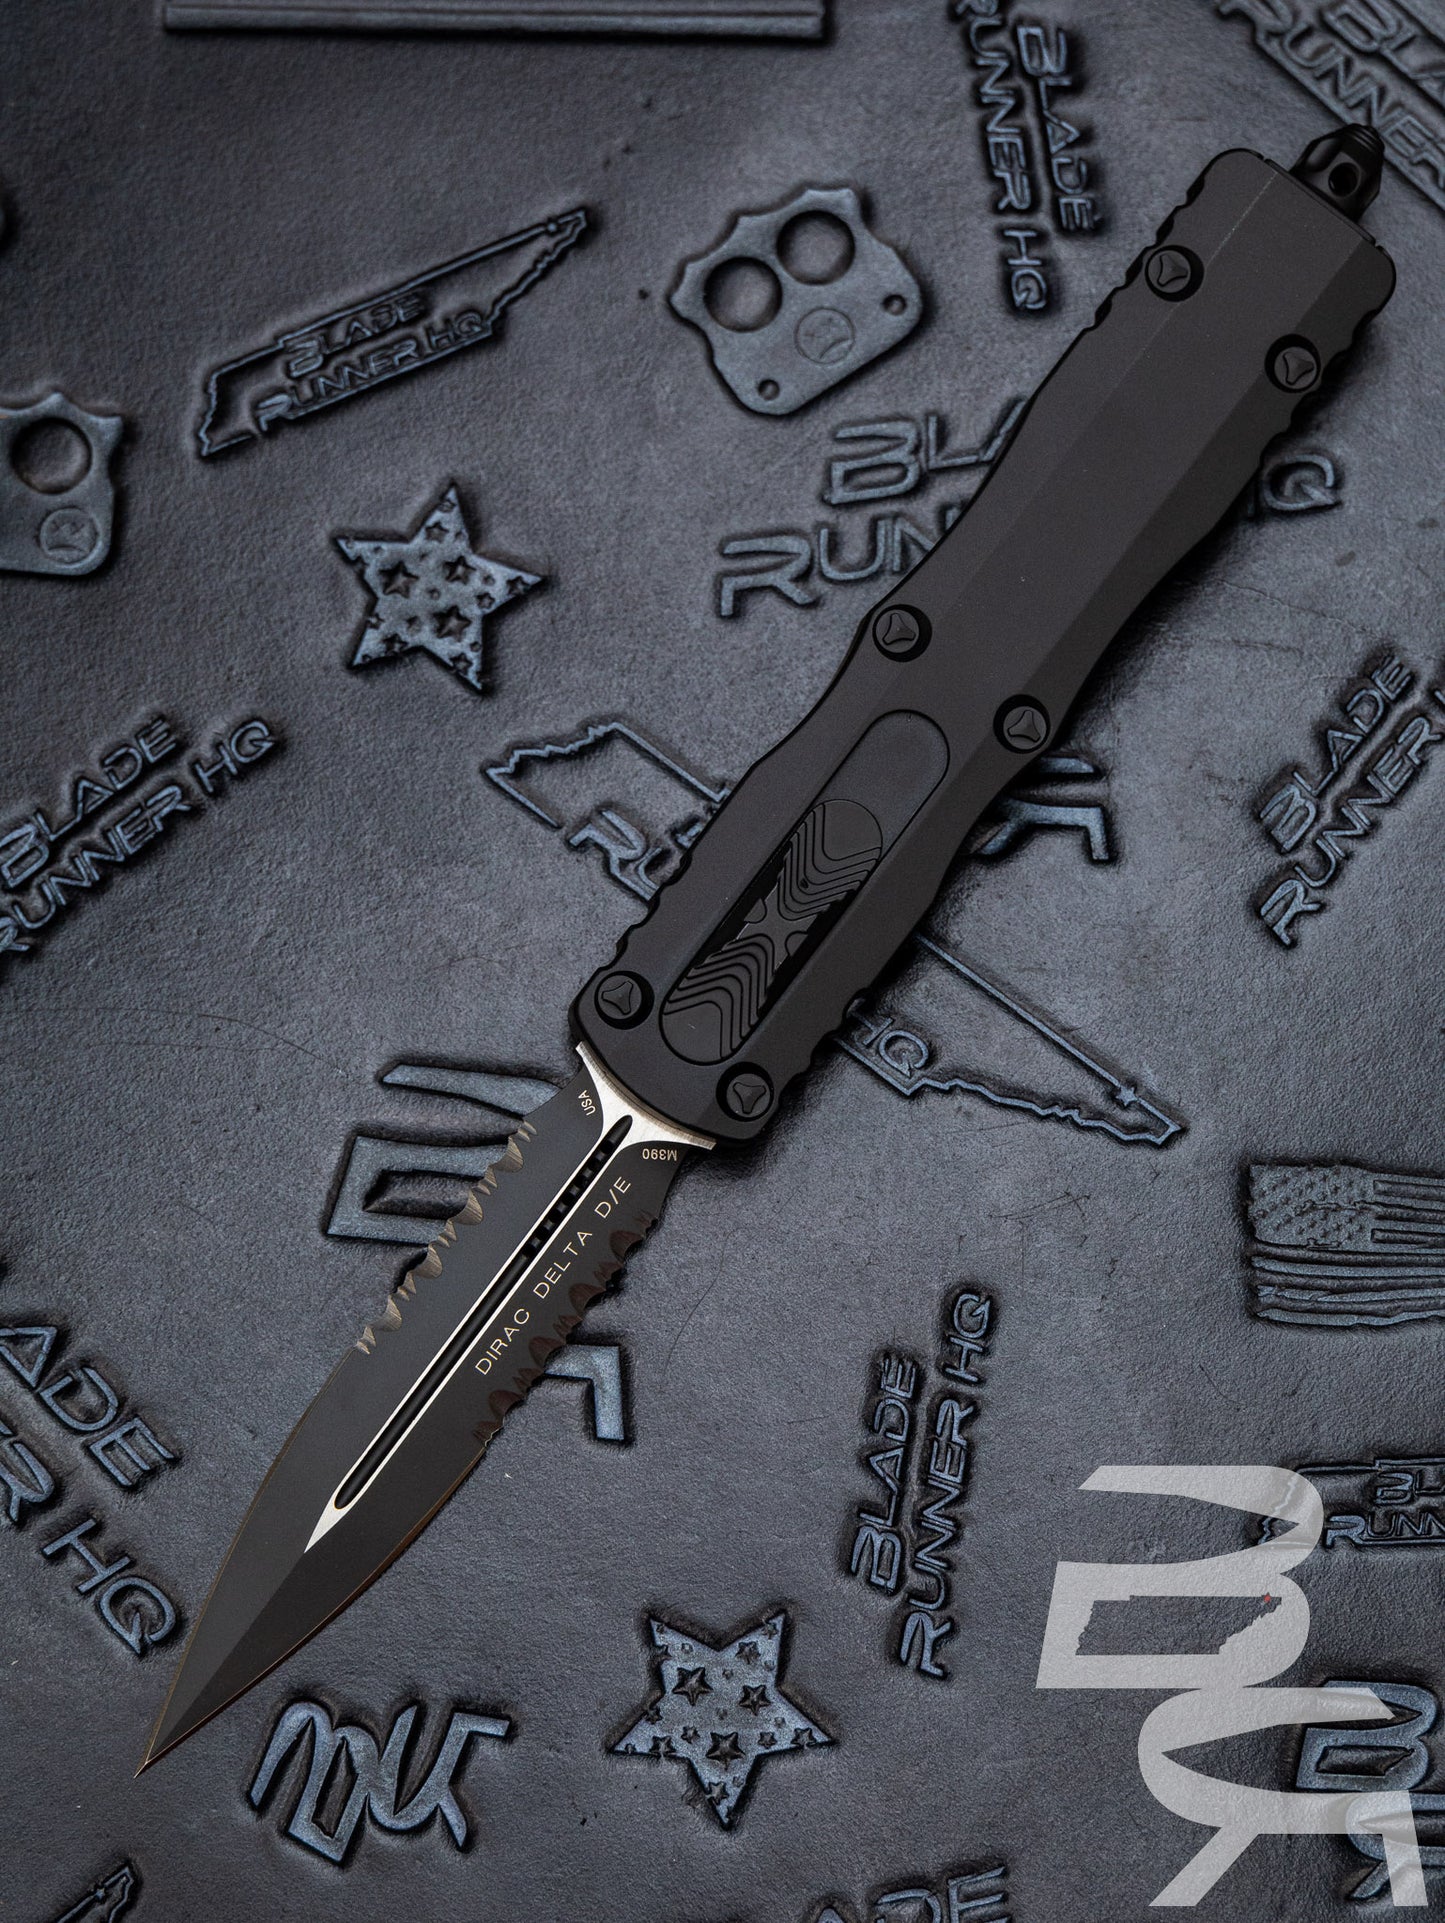 Microtech 227-2T Dirac Delta Tactical AUTO OTF Knife 3.79" Black Double Combo Edge Dagger Blade, Black Aluminum Handles